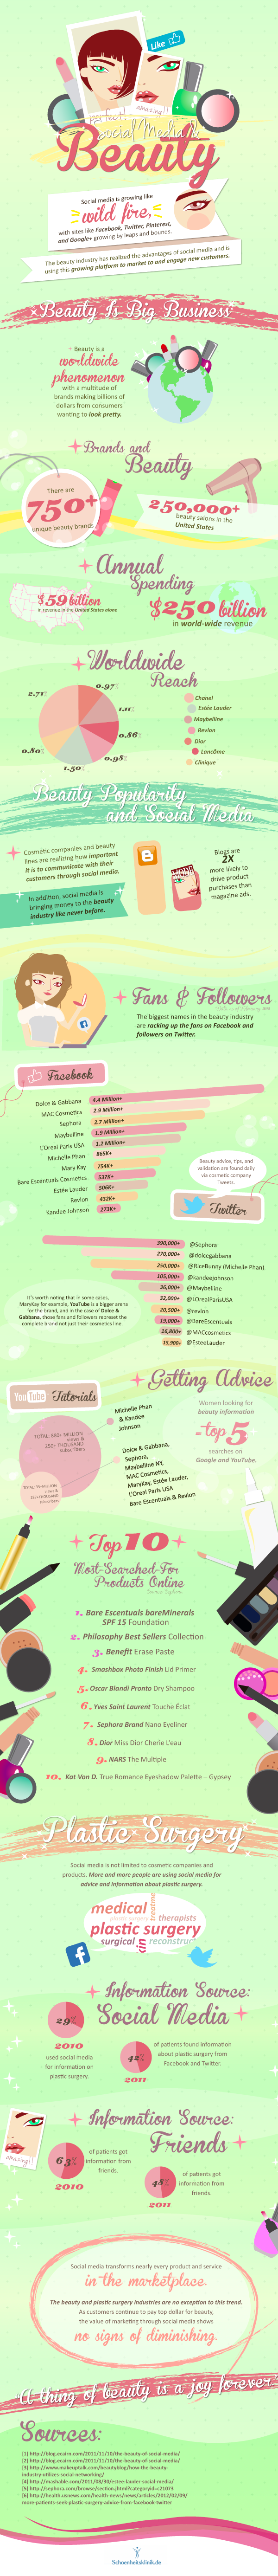 Beauty Industry Statistics and Social Media Marketing